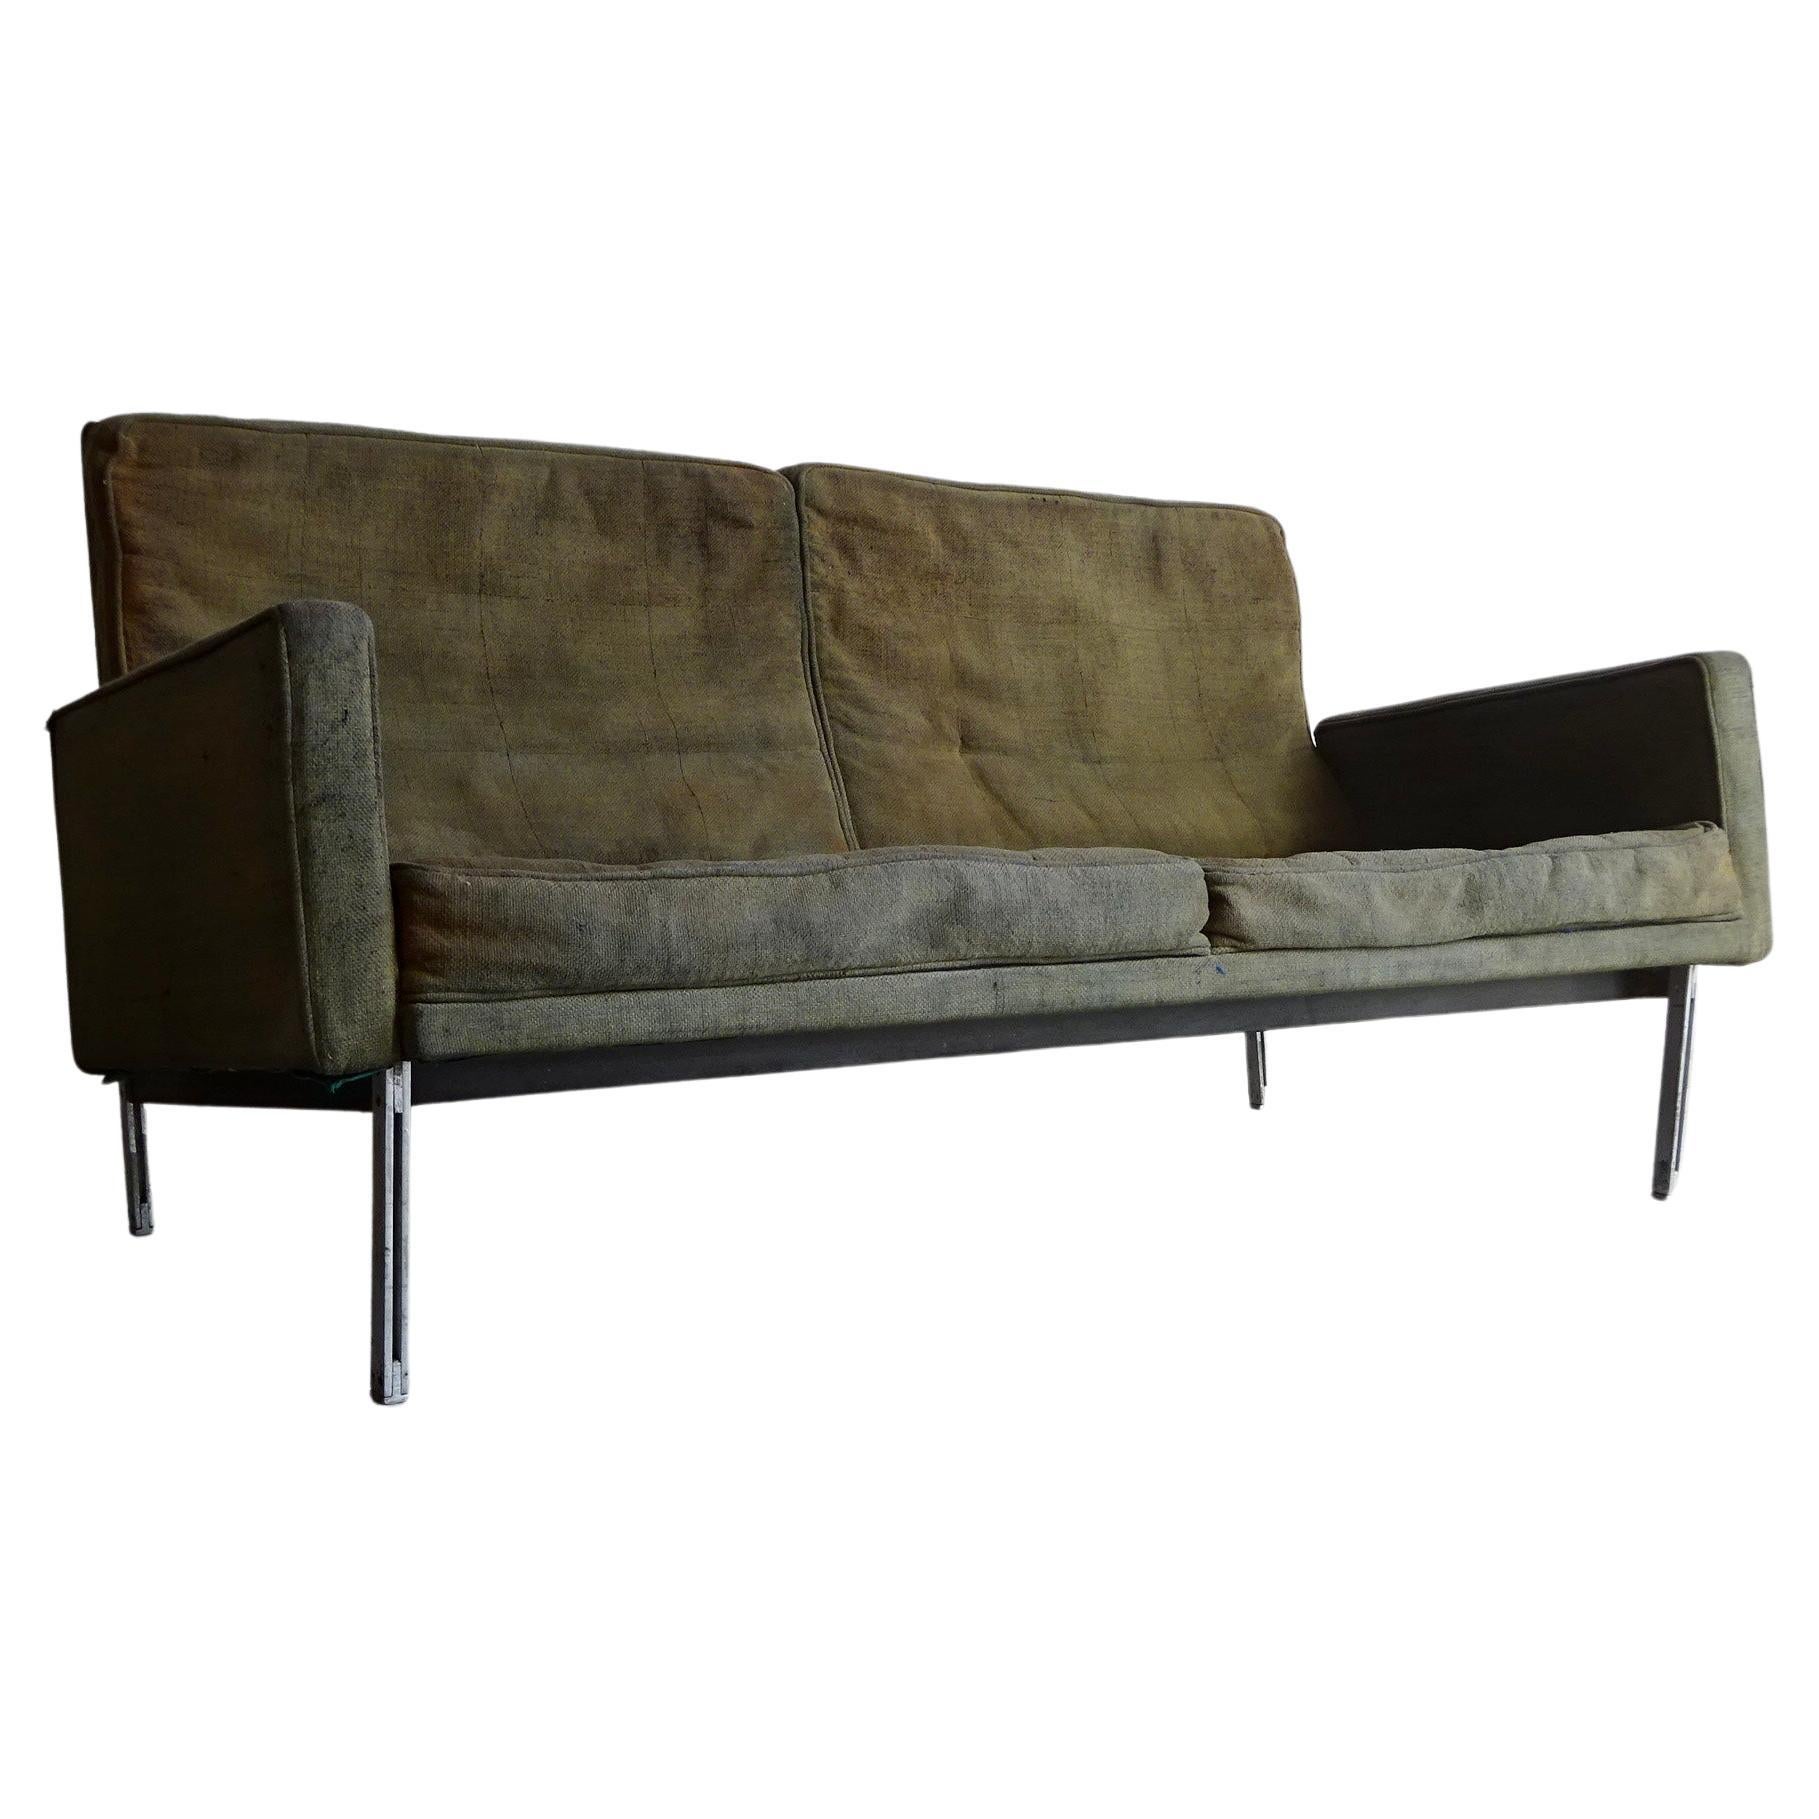 Paralleles Bar-Sofa, Modell 57, von Florence Knol, USA, 1960er Jahre.